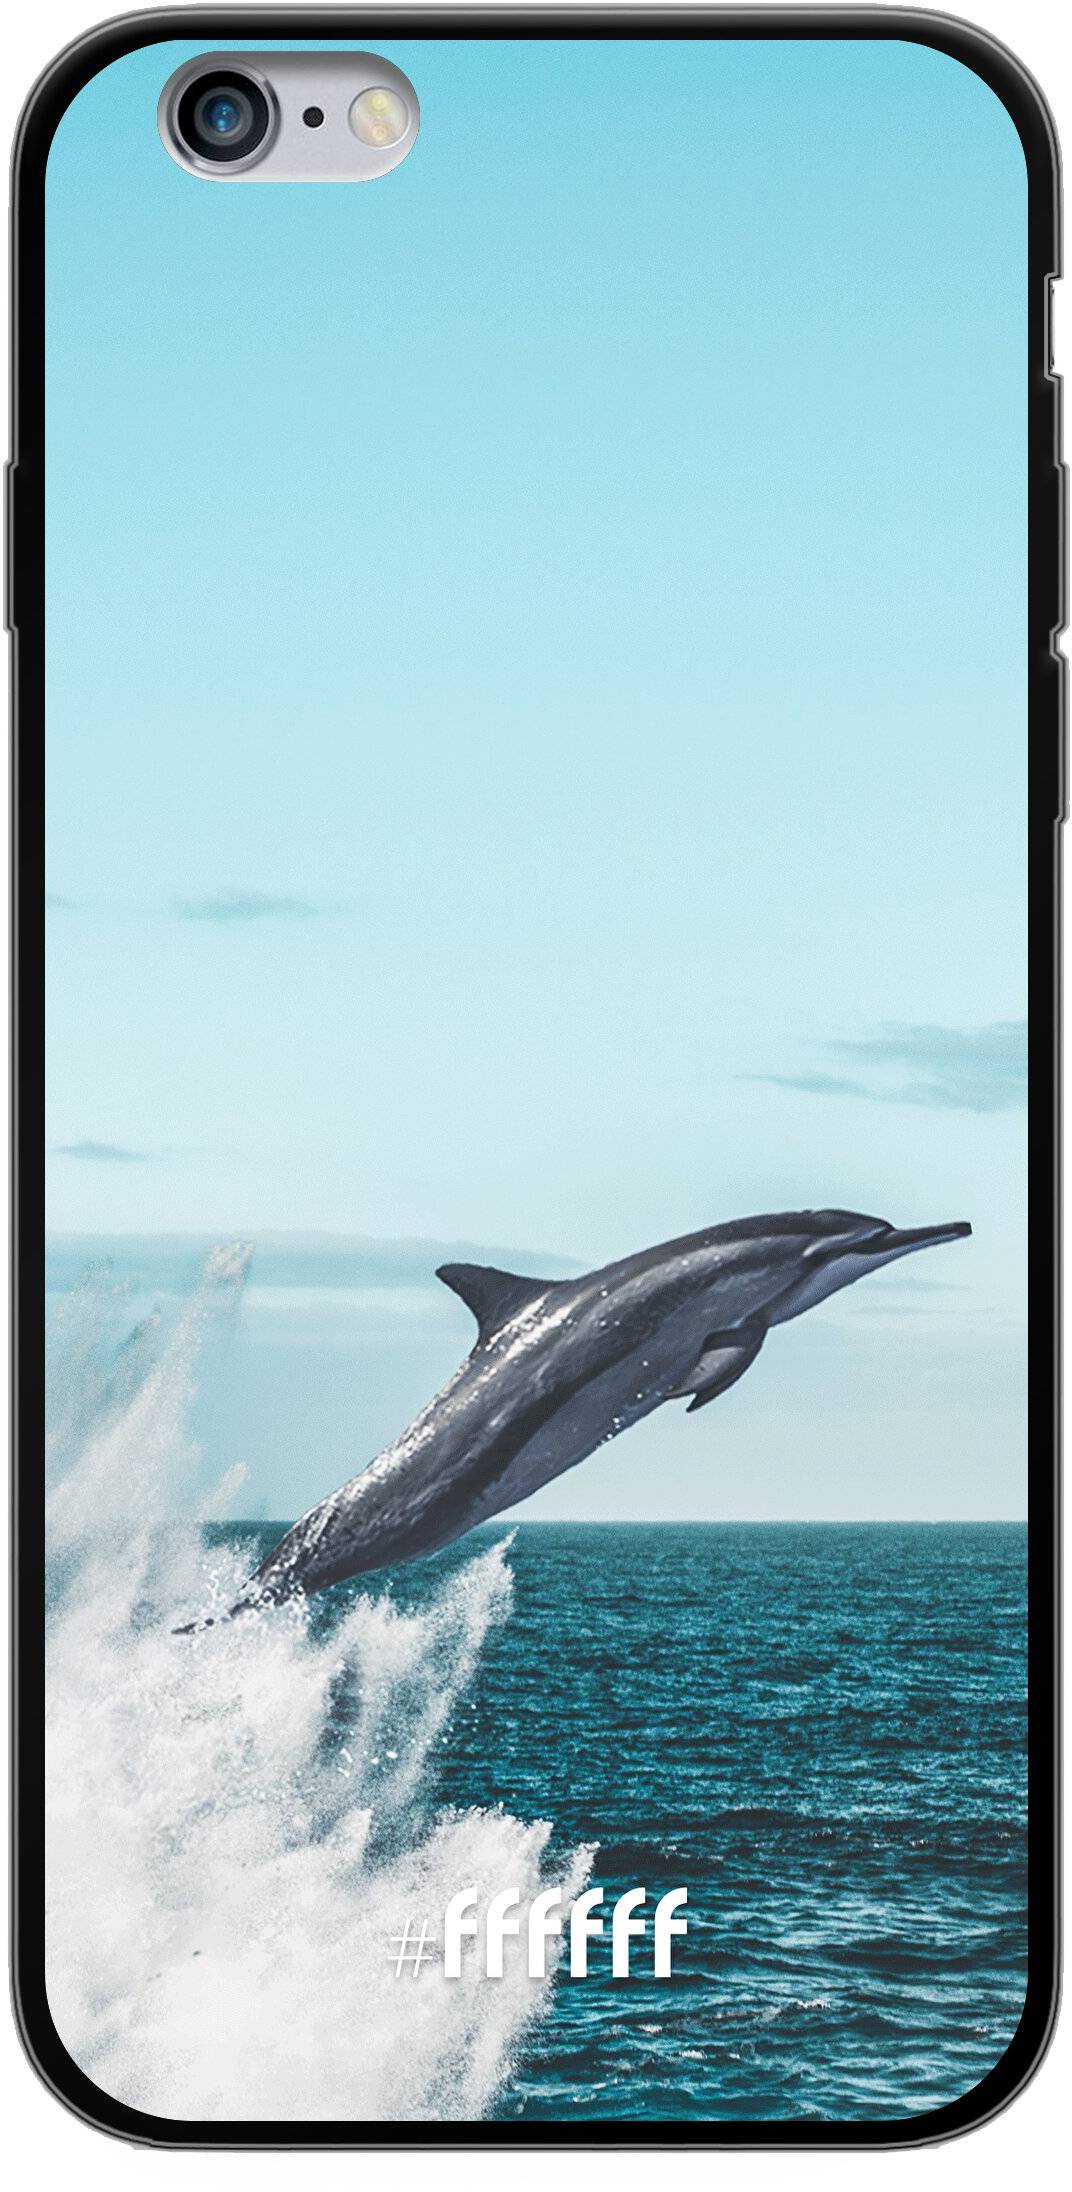 Dolphin iPhone 6